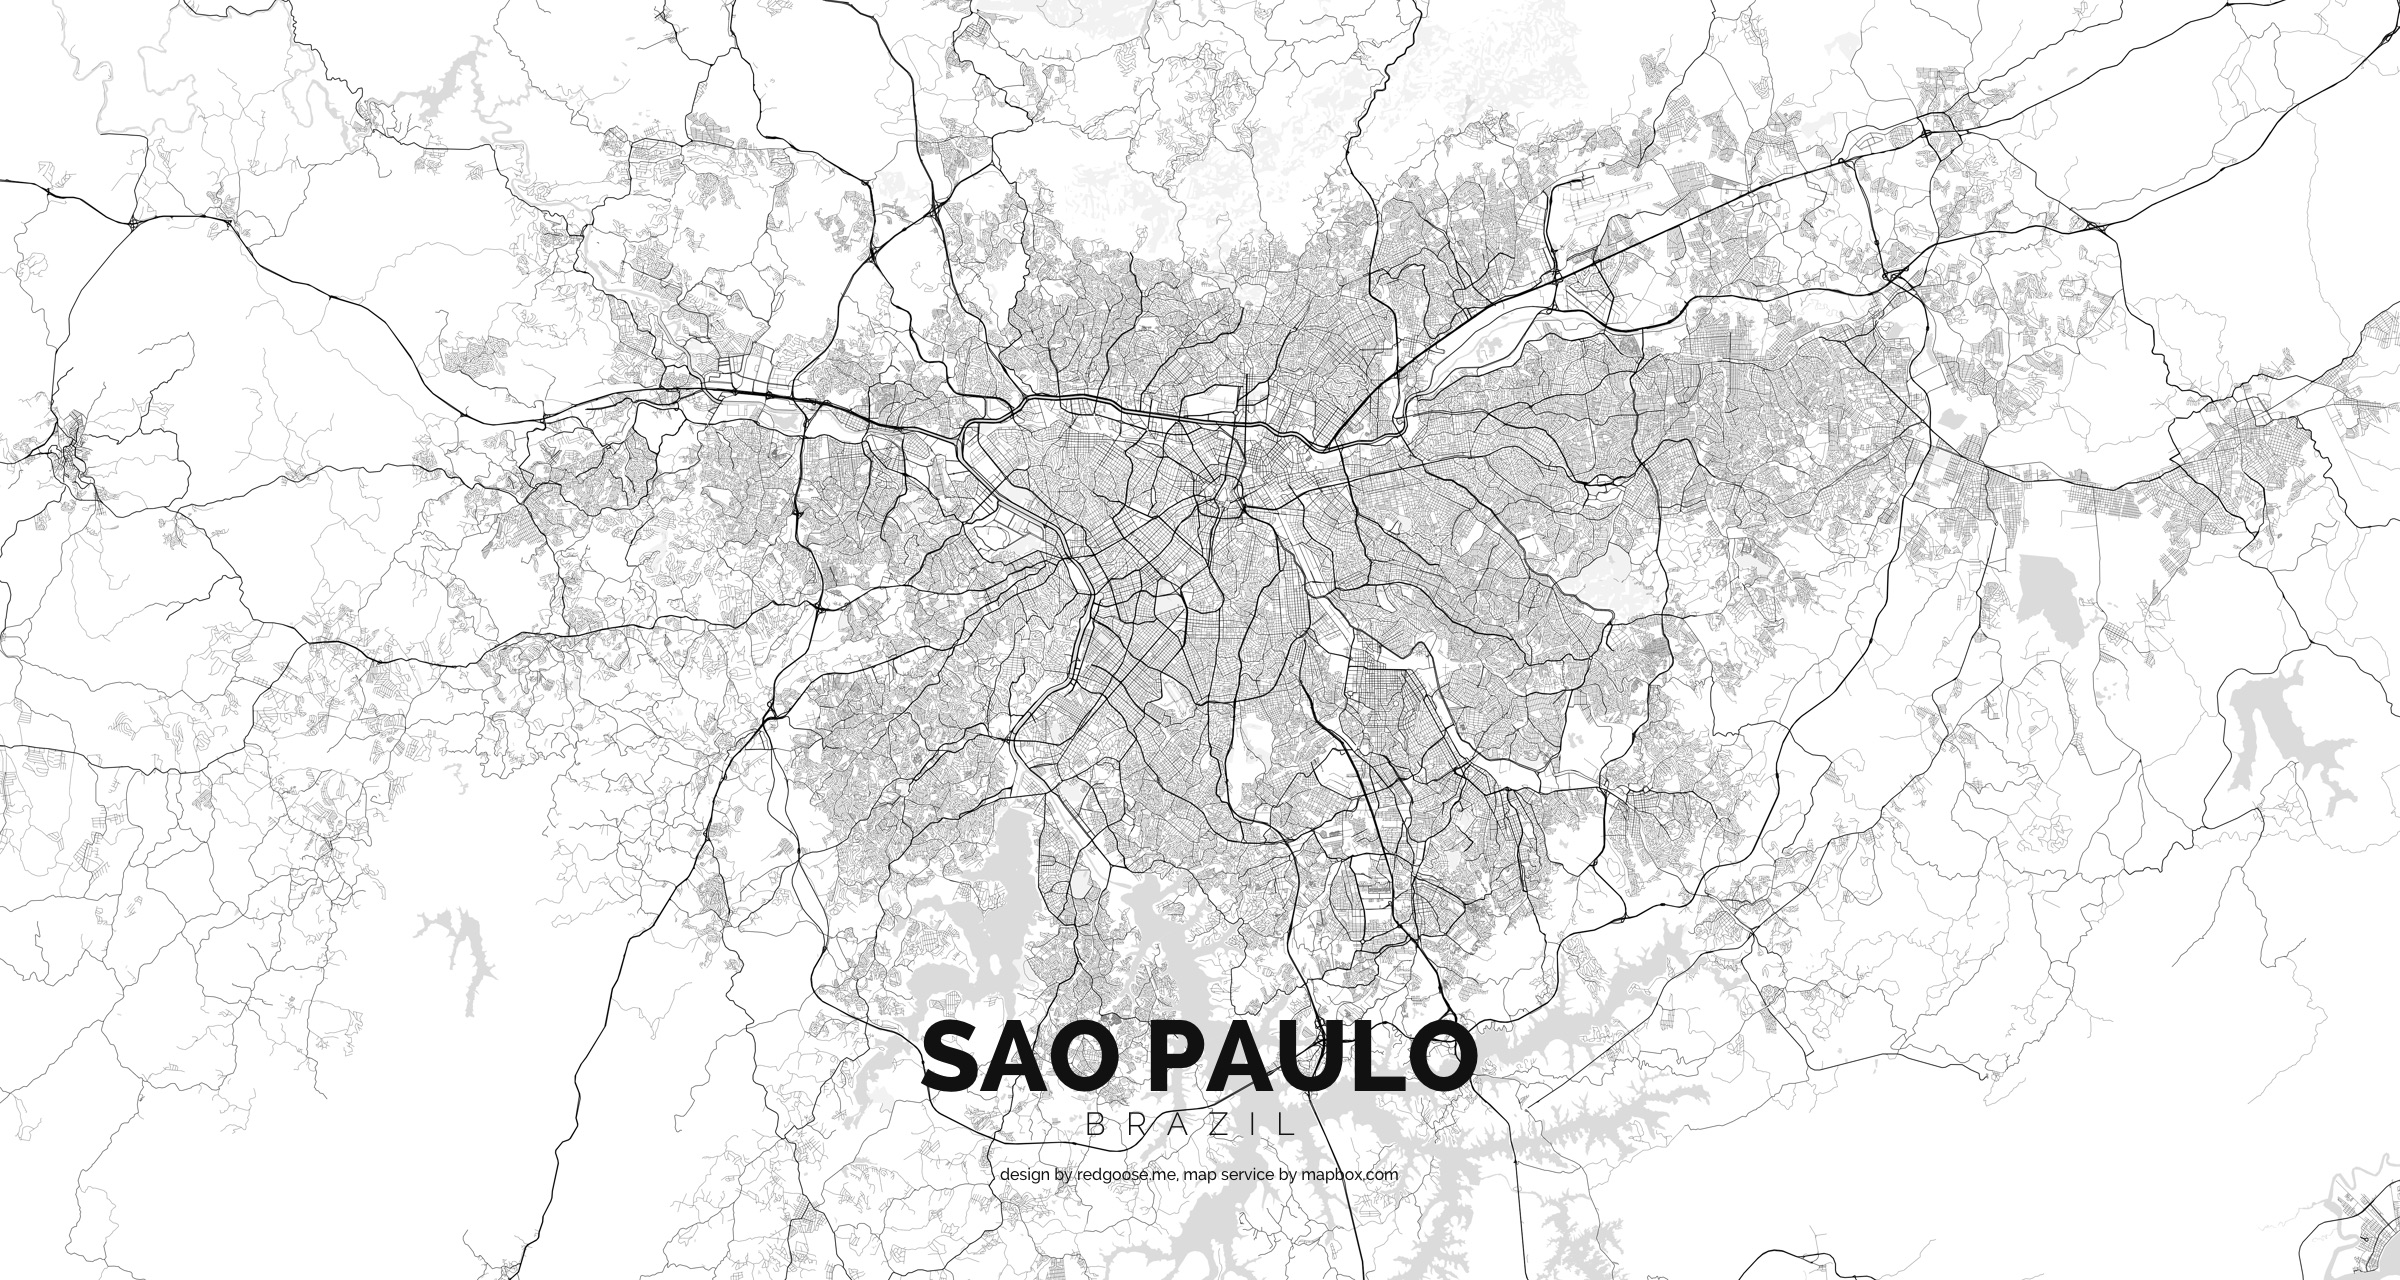 Brazil_-_Sao_Paulo.jpg